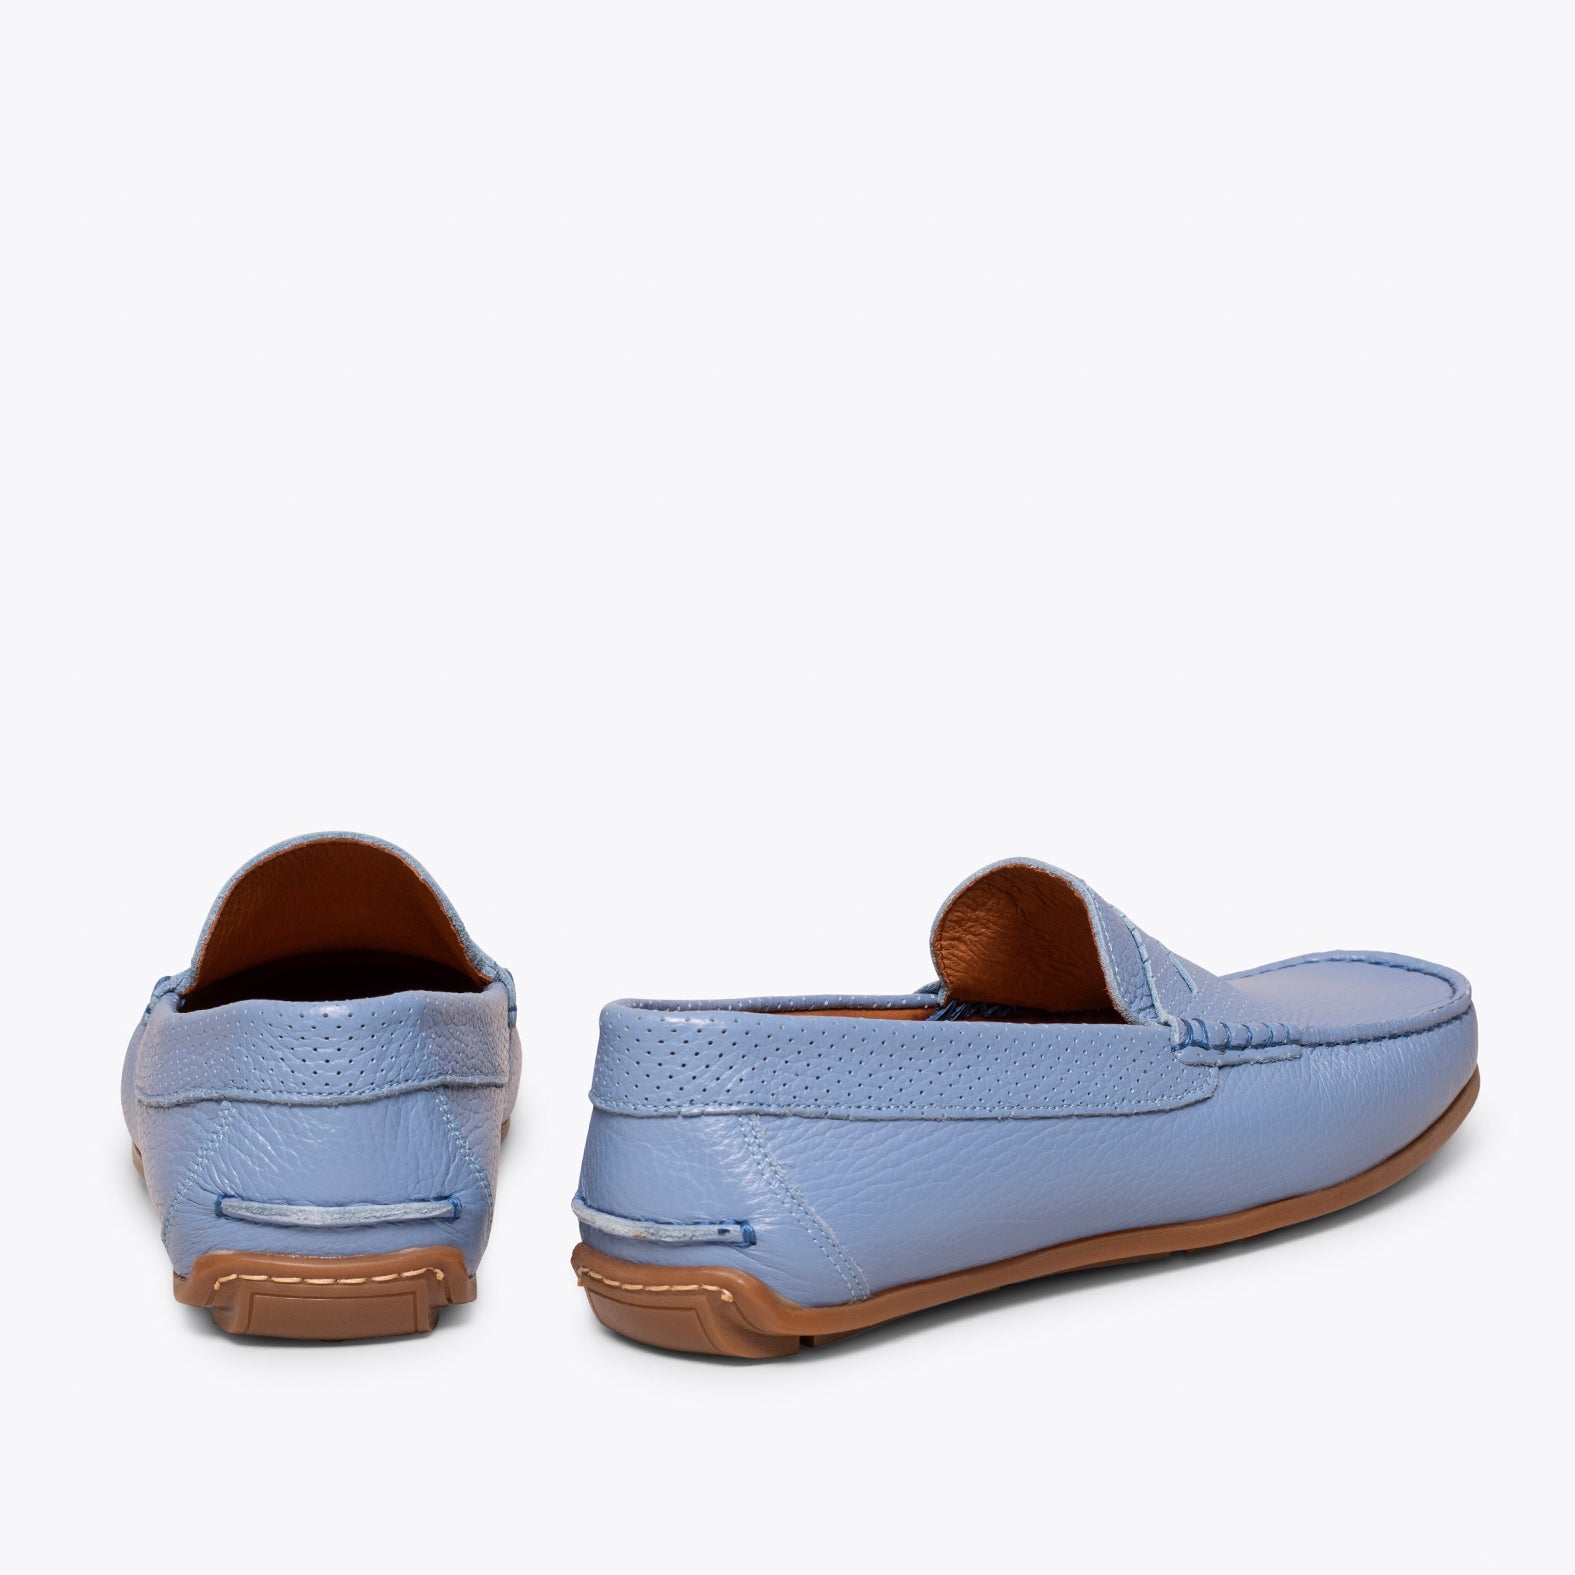 MOCCASIN – BLUE nappa leather loafer for men